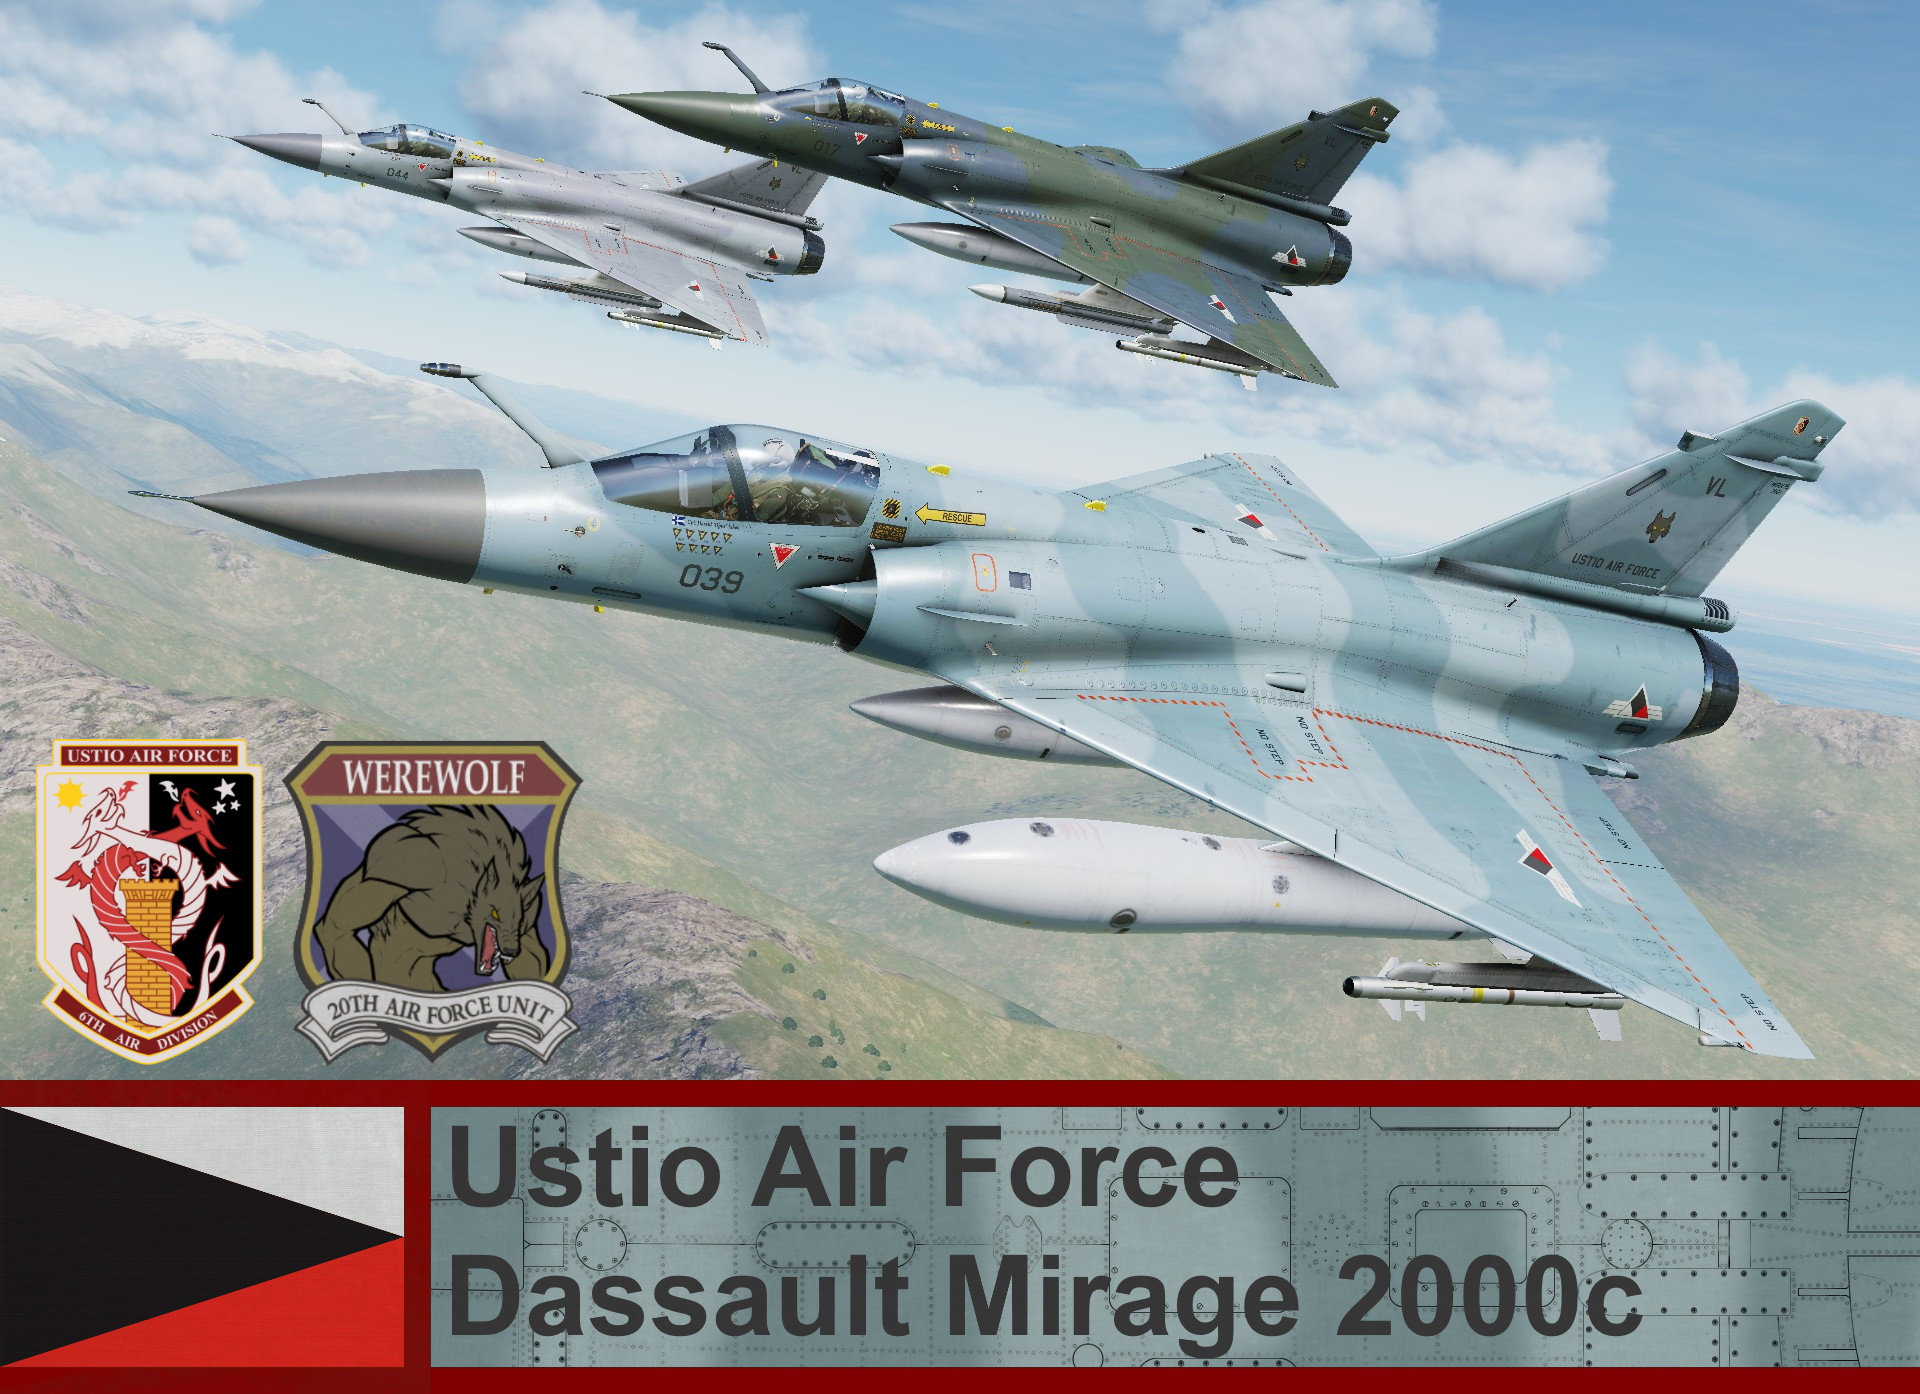 Ustio Air Force Mirage 2000C - Ace Combat Zero (20th AFU)